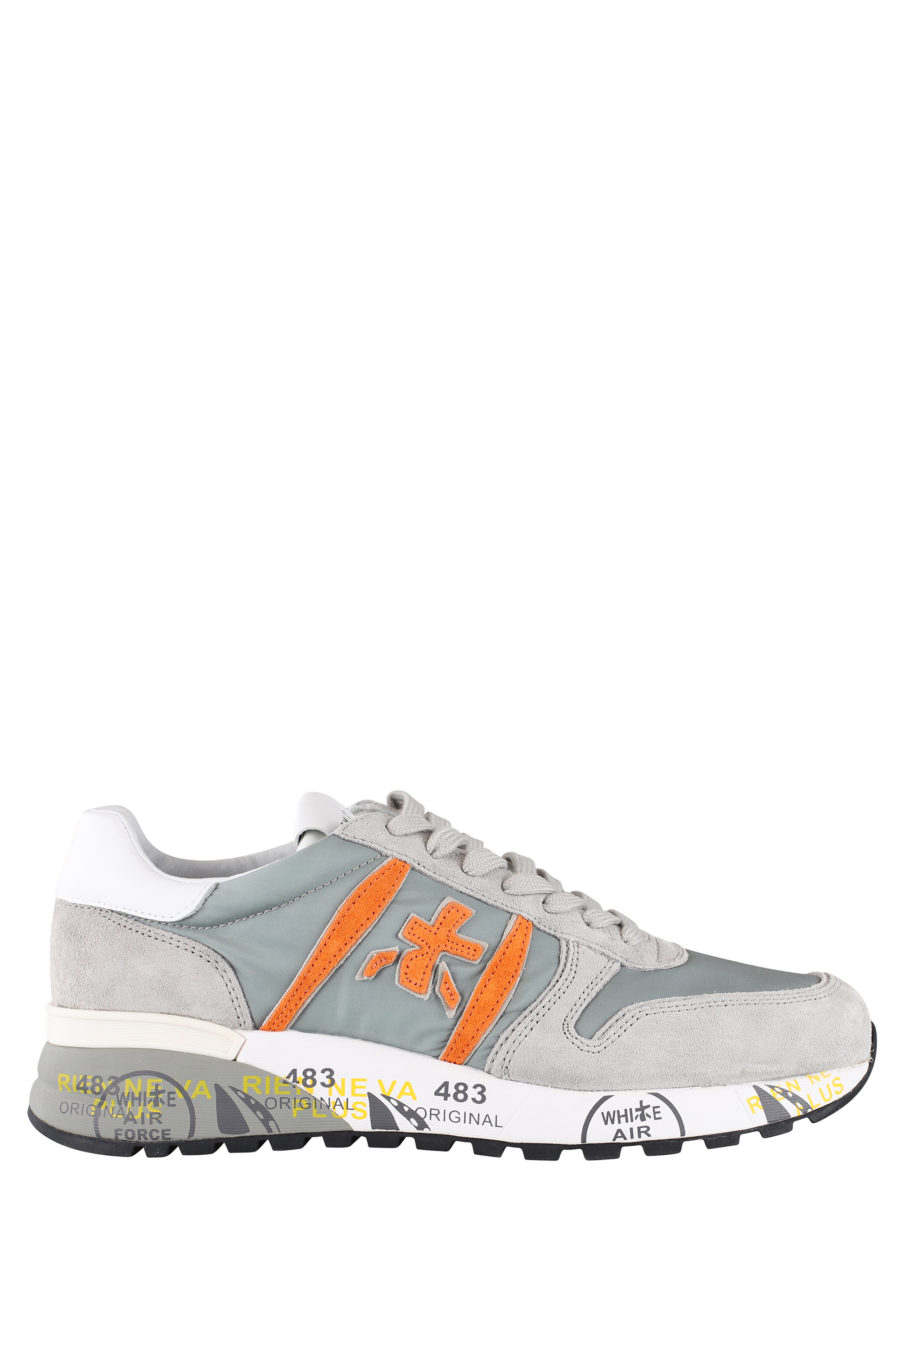 Zapatillas grises con detalles naranja "Lander" - IMG 9620